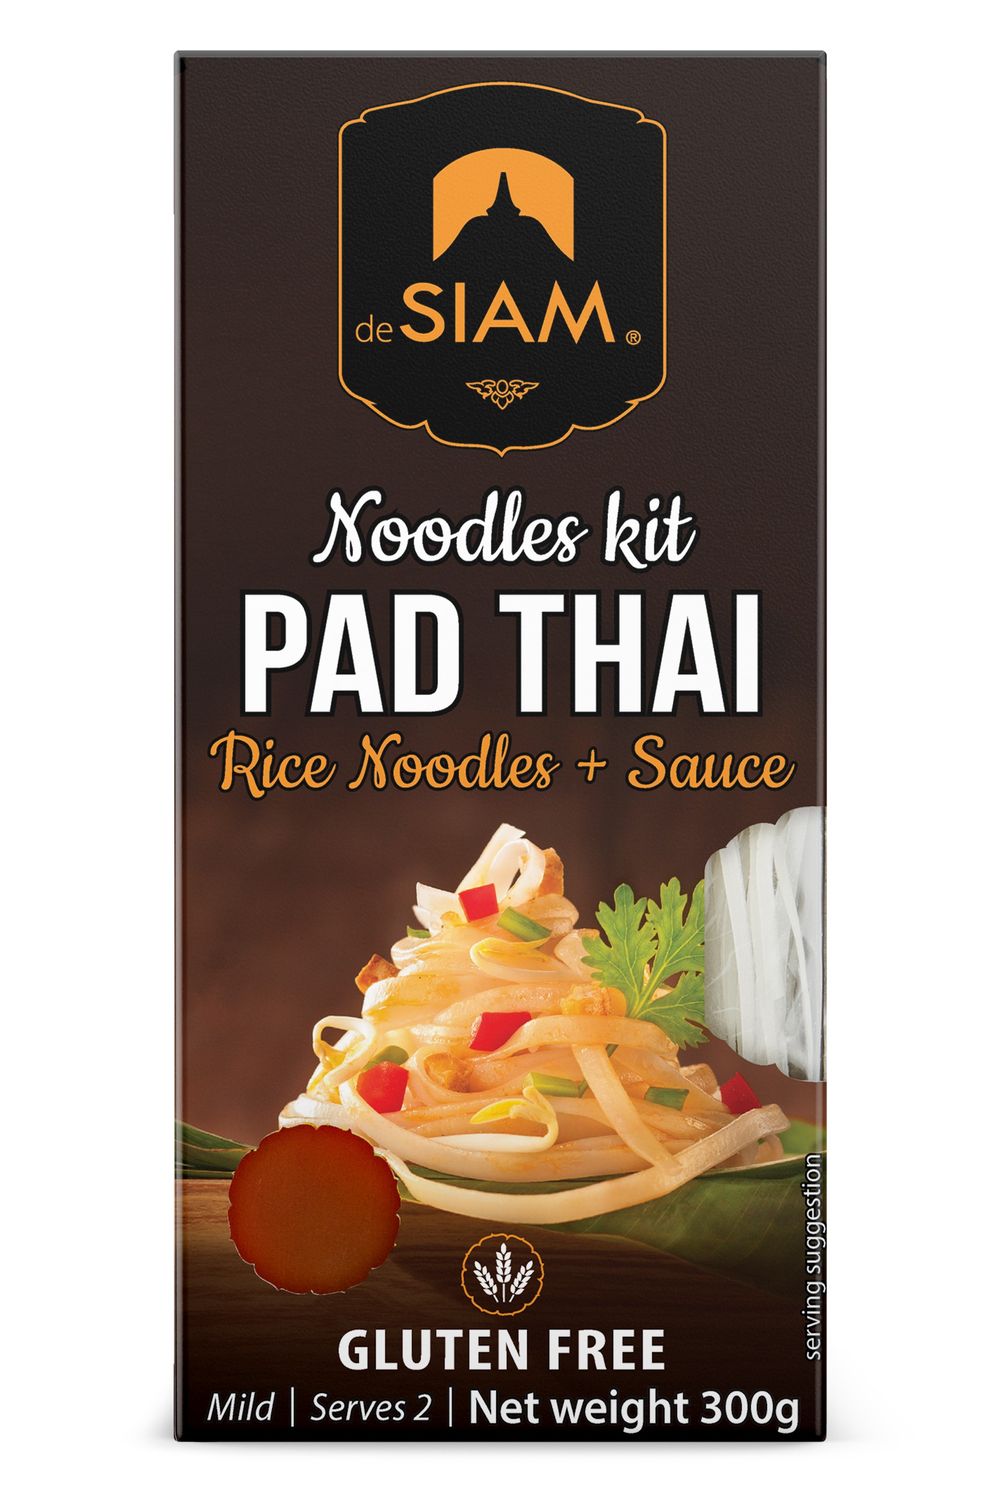 DeSiam Pad Thai Noodles Kit